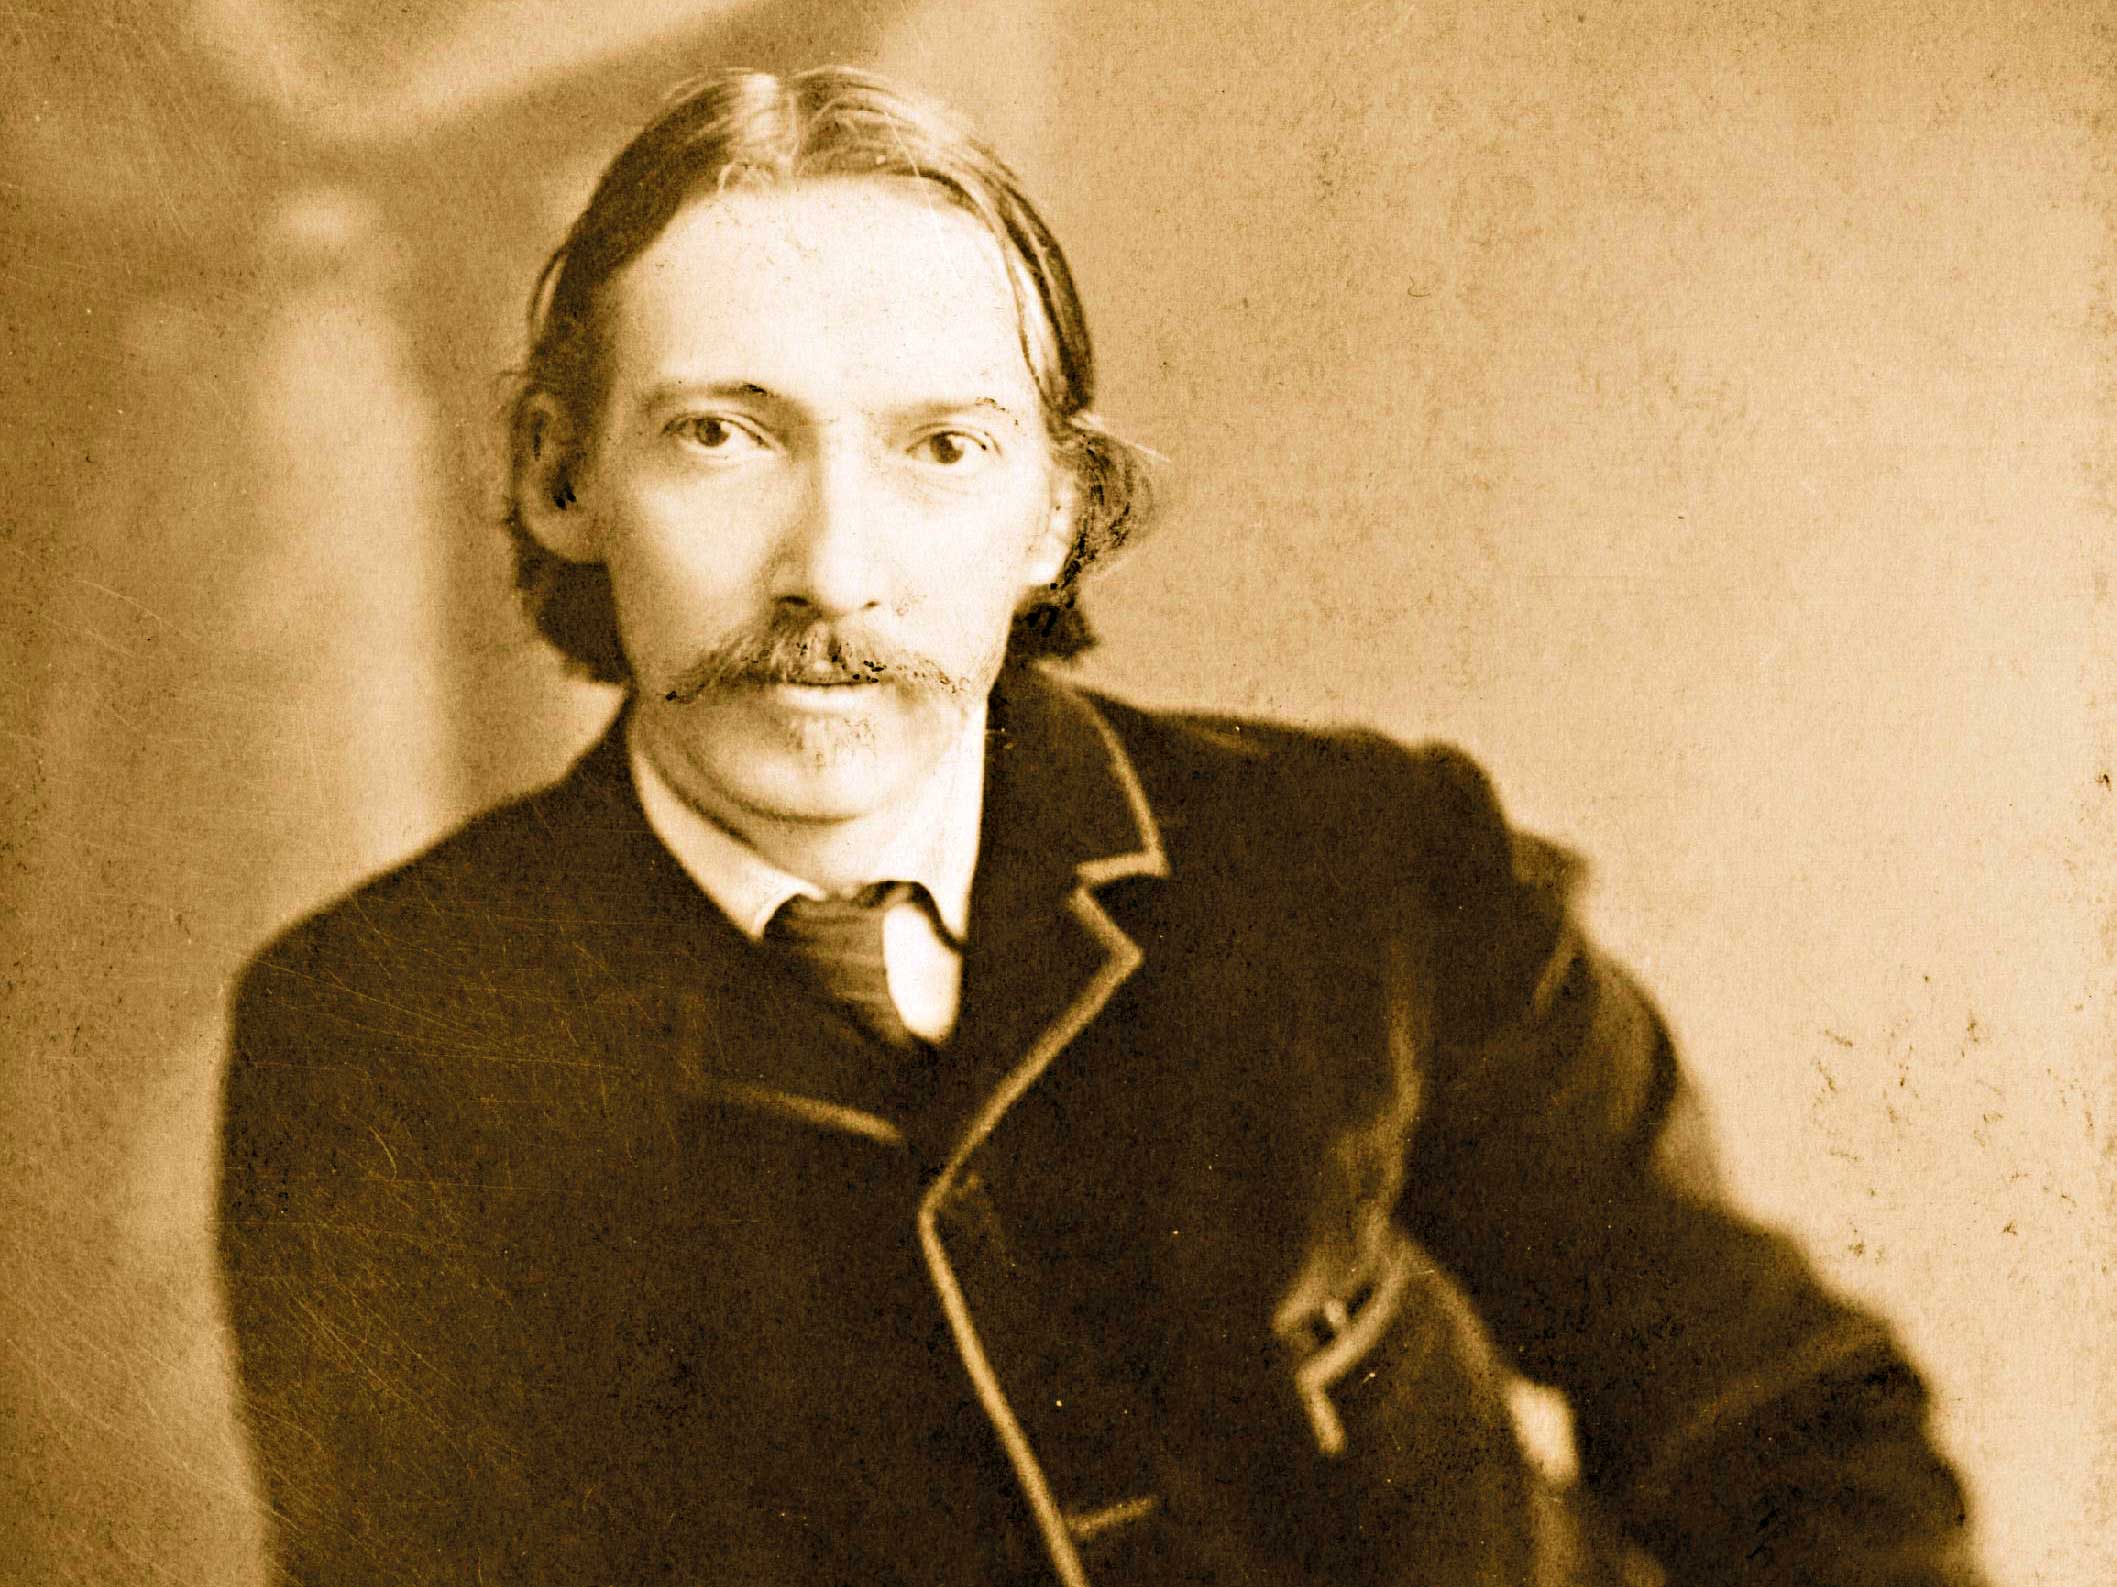 Robert Louis Stevenson photo #11246, Robert Louis Stevenson image